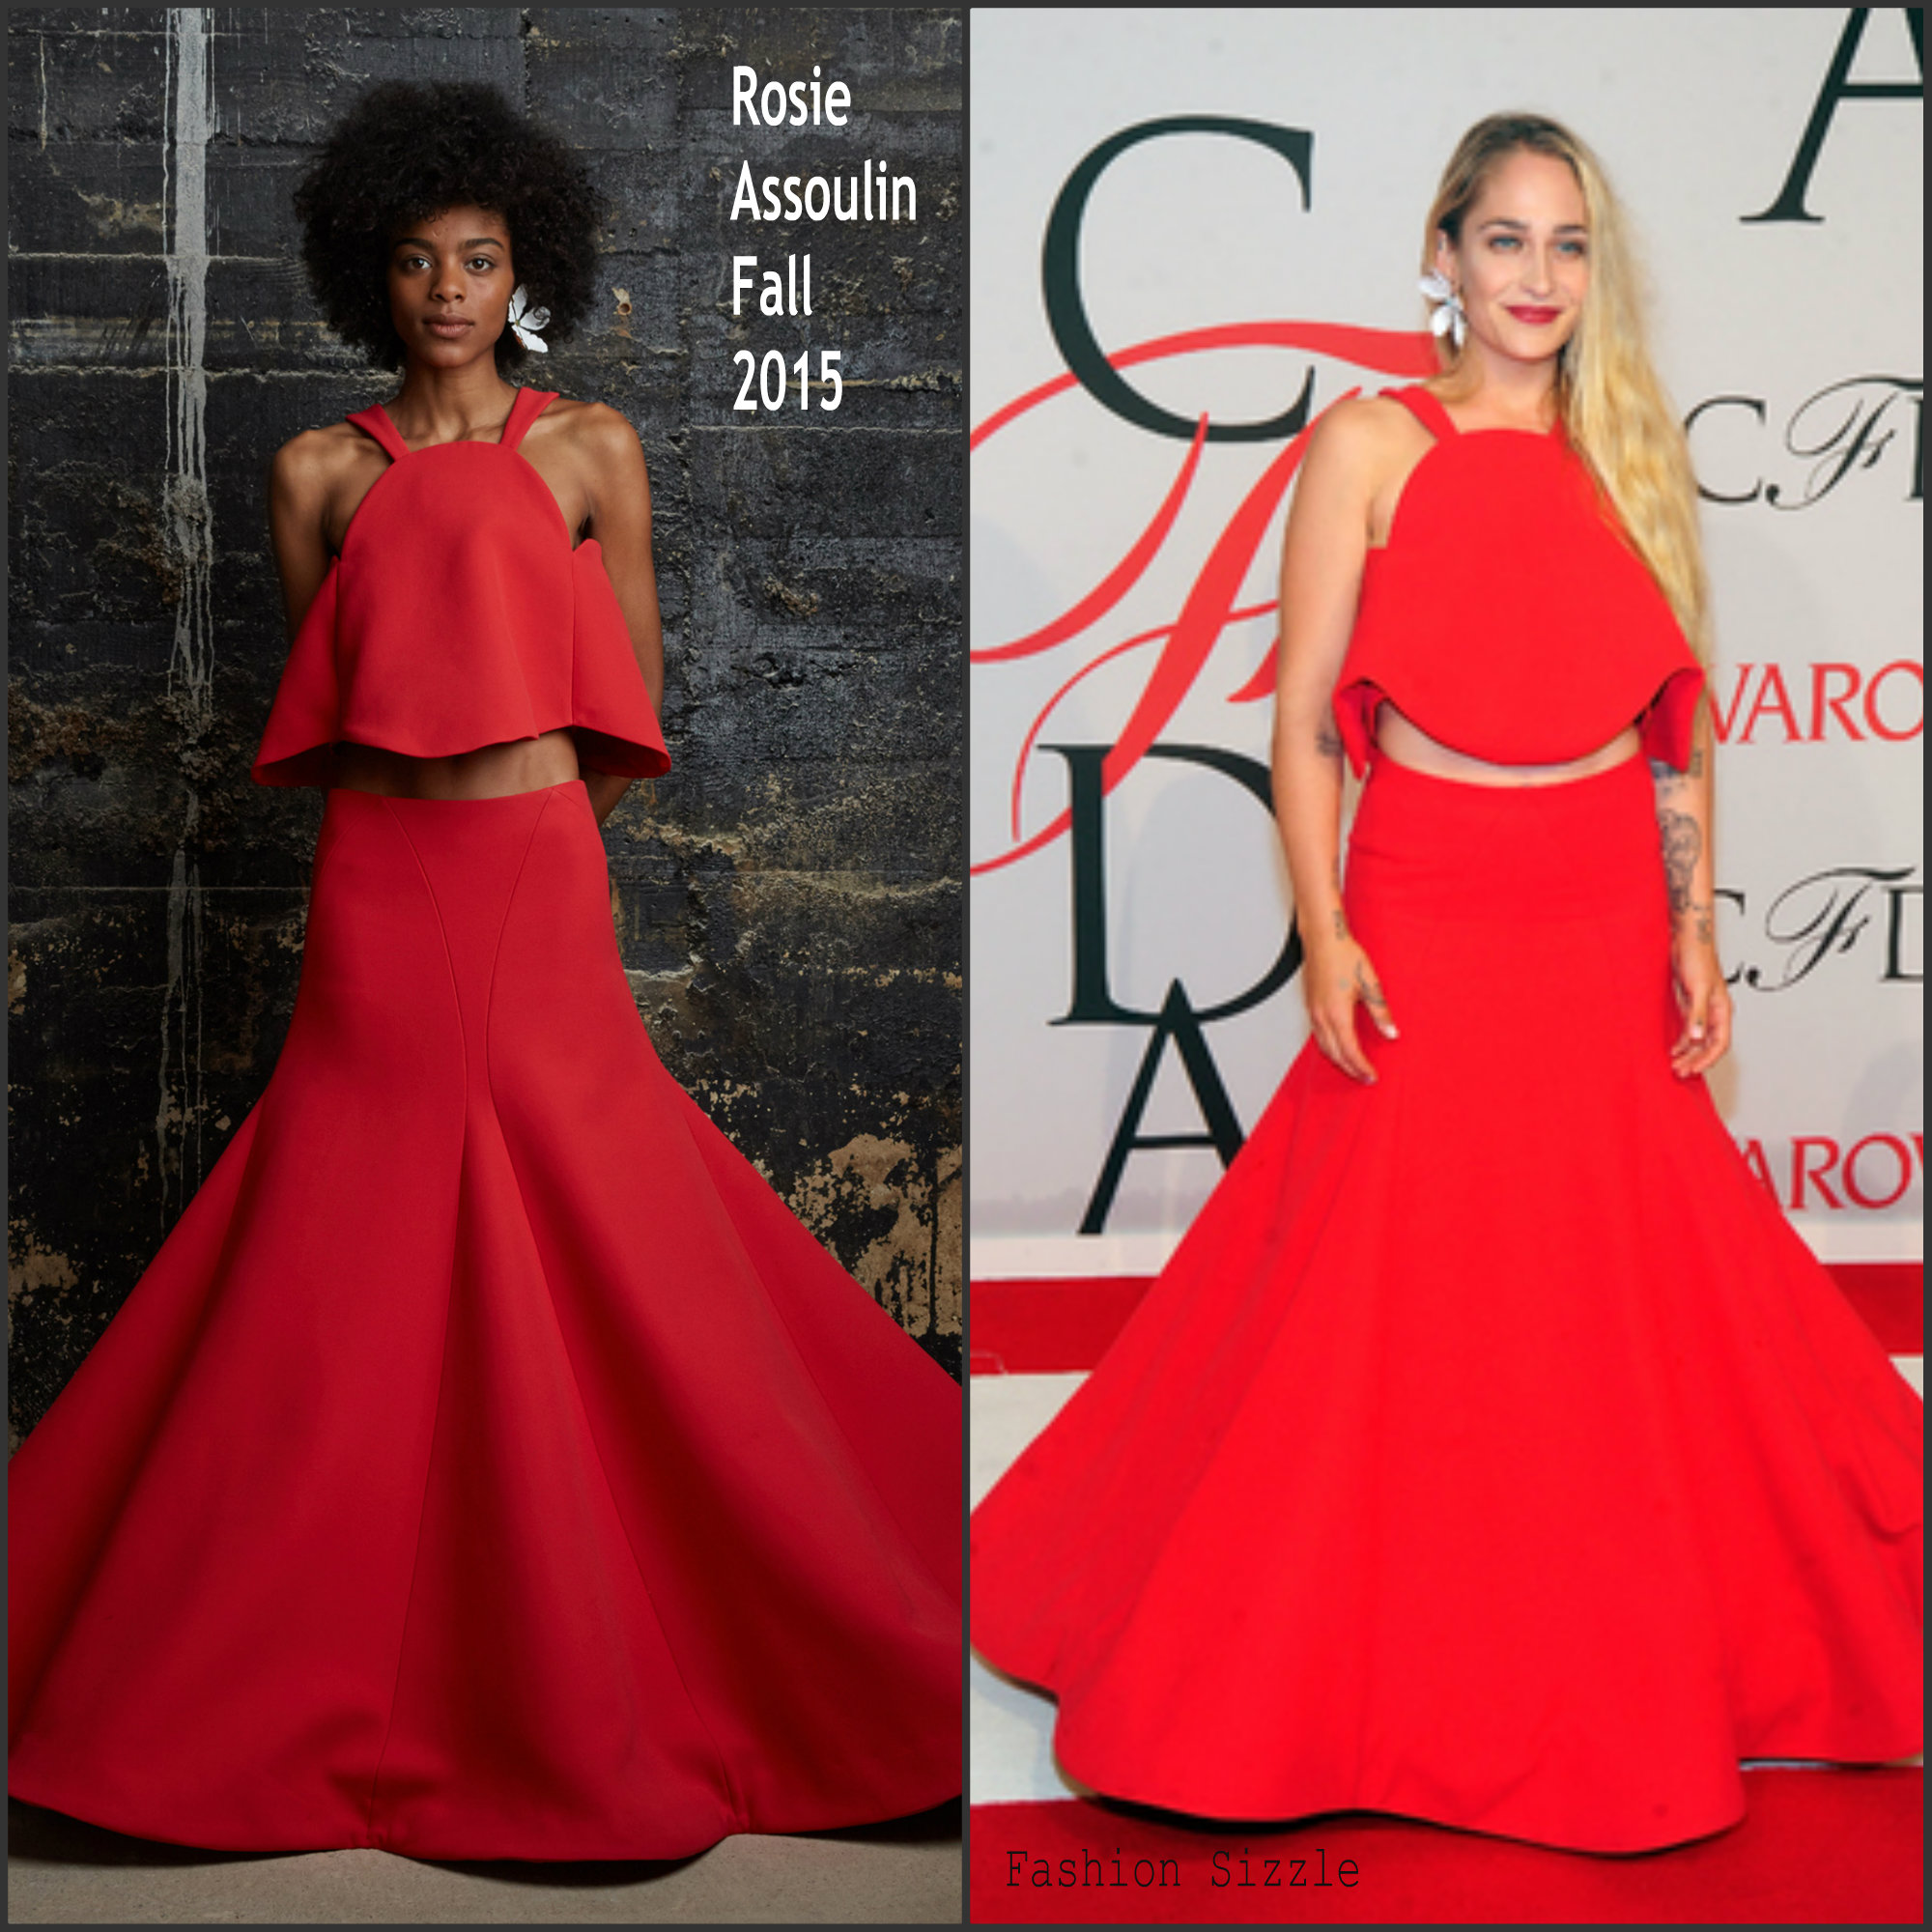 jemima-kirke-in-rosie-assoulin-2015-cfda-fashion-awards